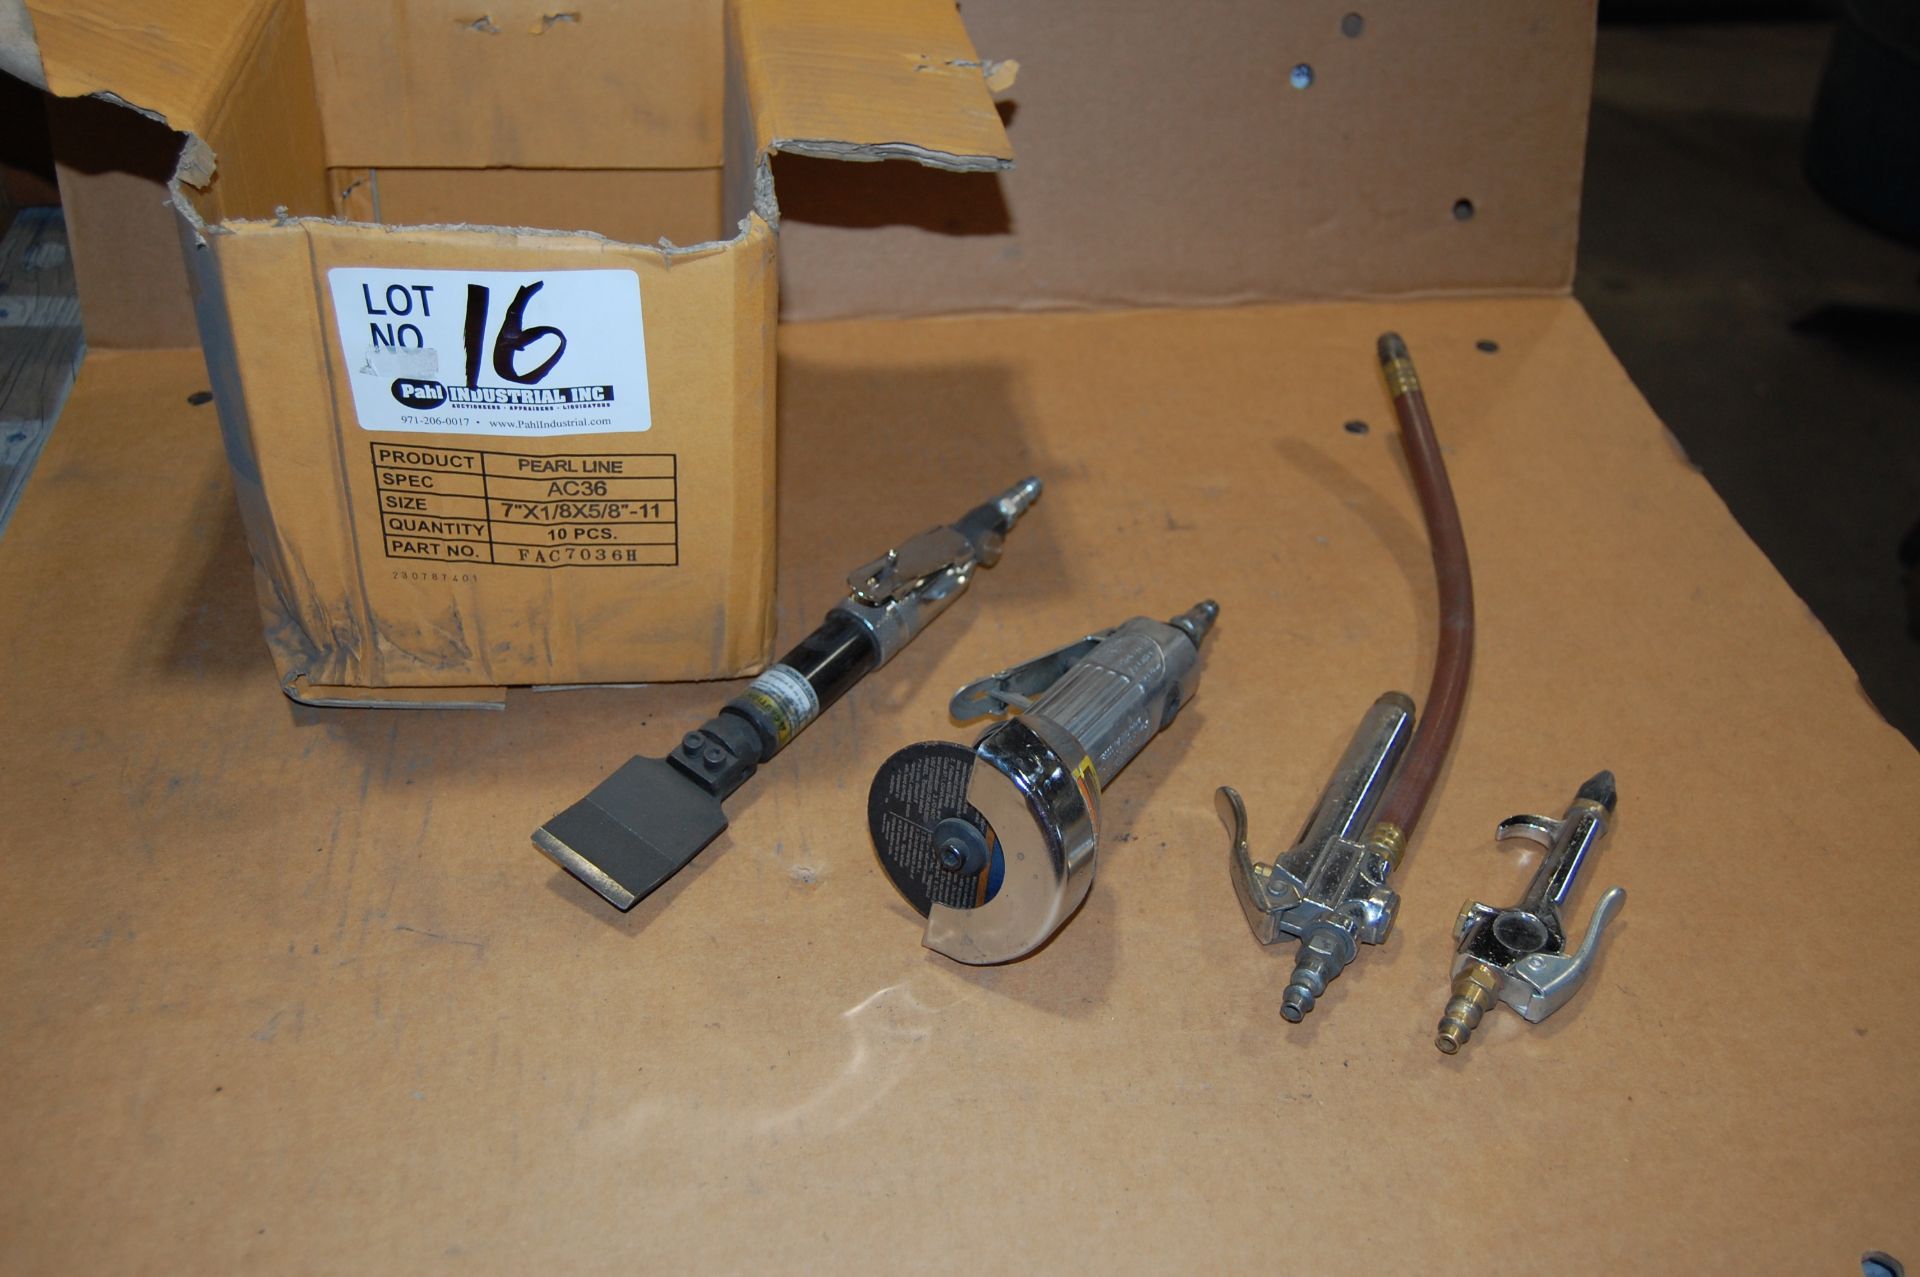 Pneumatic Chisel, die grinder and (2) air guns